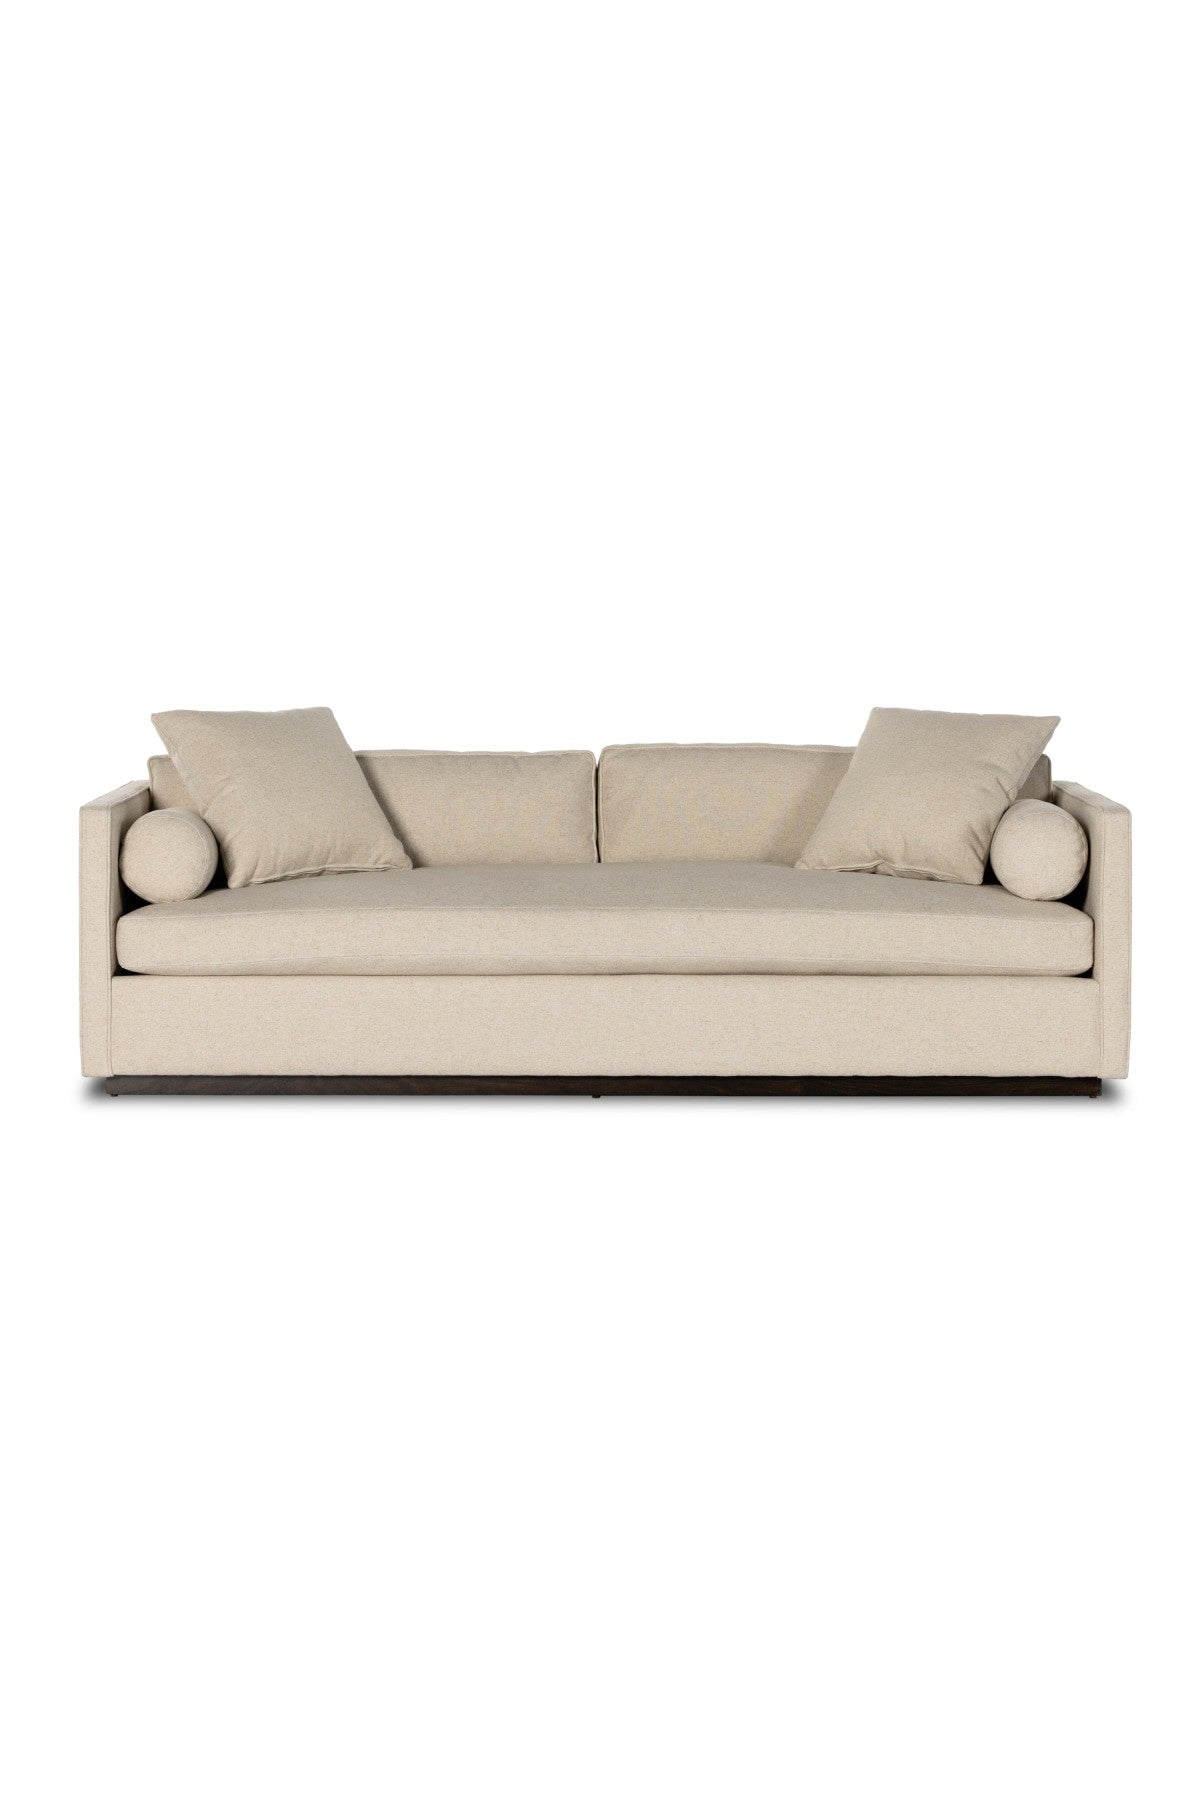 Bushnell Sofa